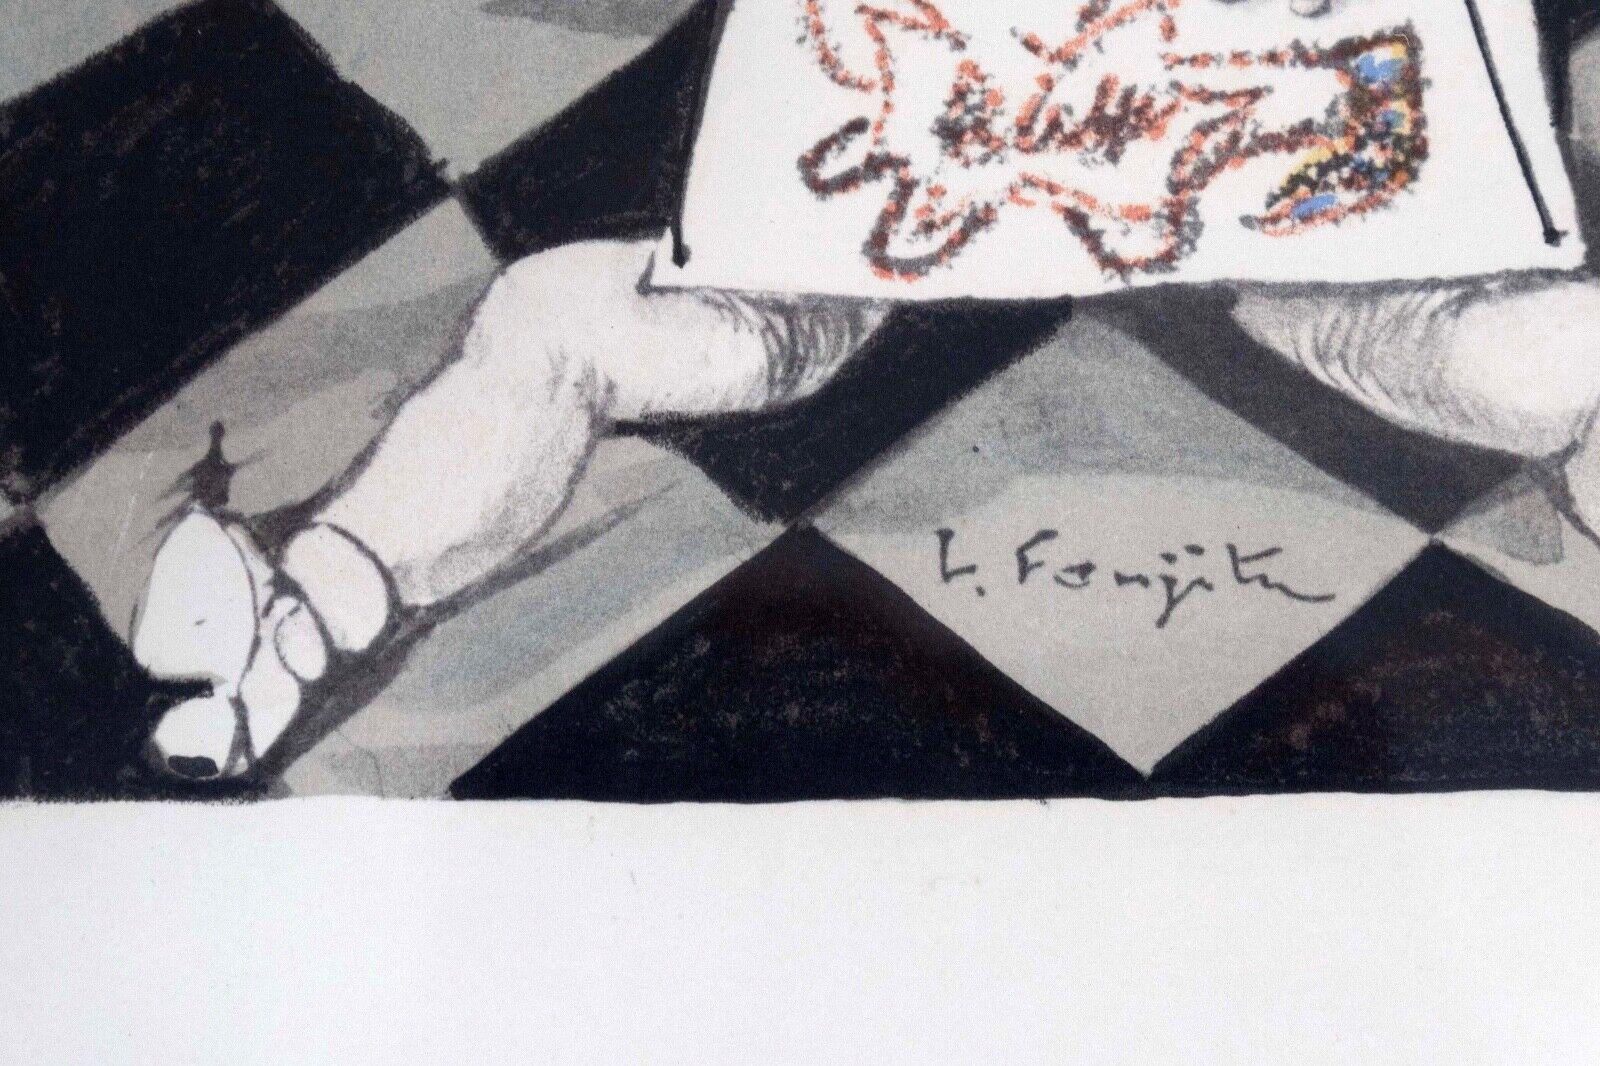 Leonard Tsugouharu L’Artiste Signed Modern Lithograph on Paper 1963 Framed 55/15 For Sale 1